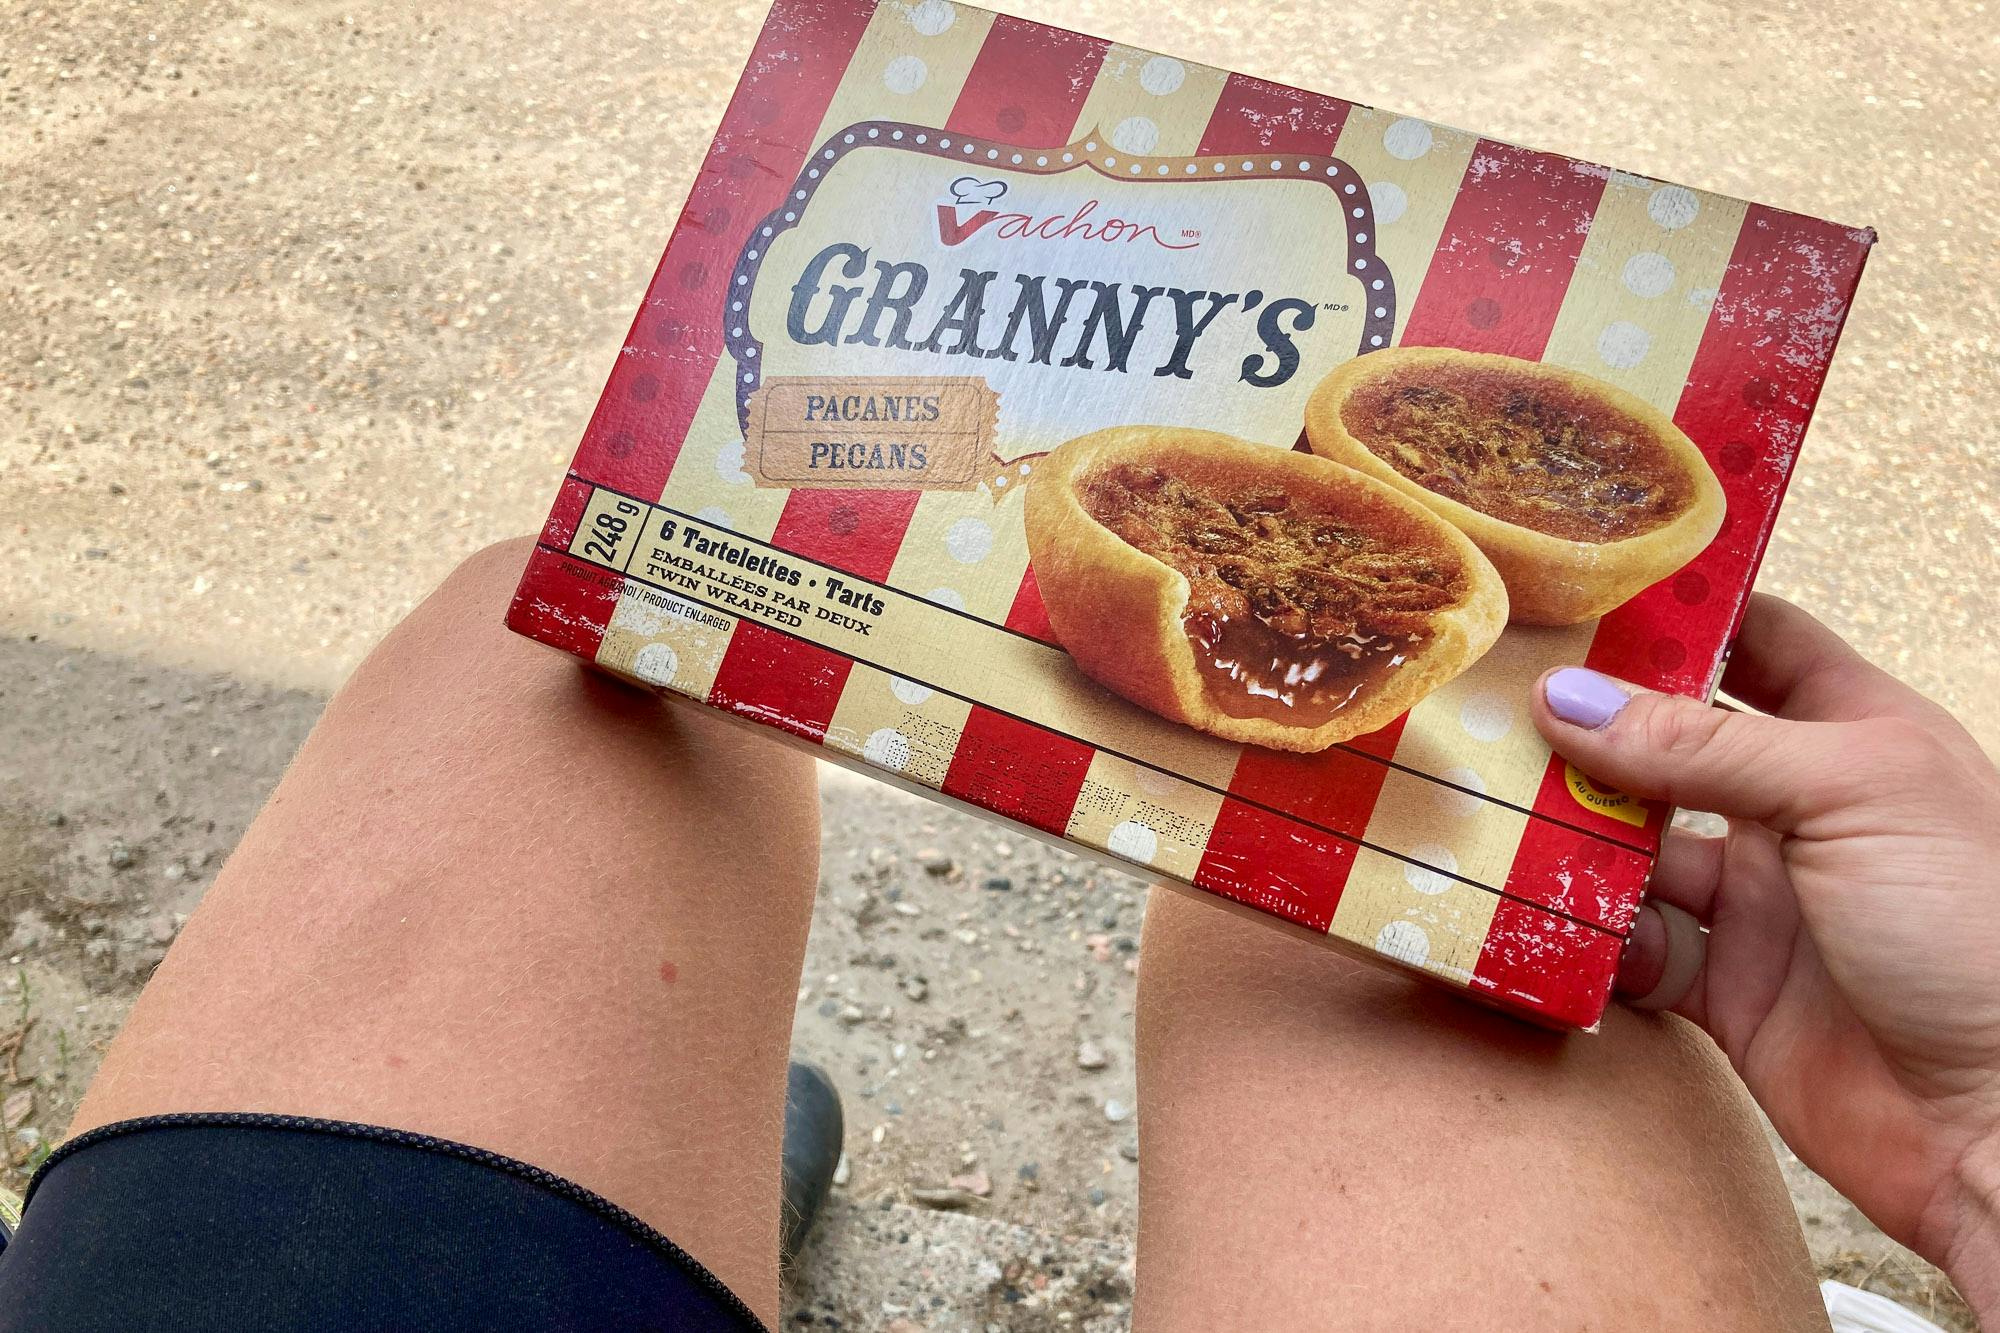 Grannys butter tarts, the perfect bonk fuel.